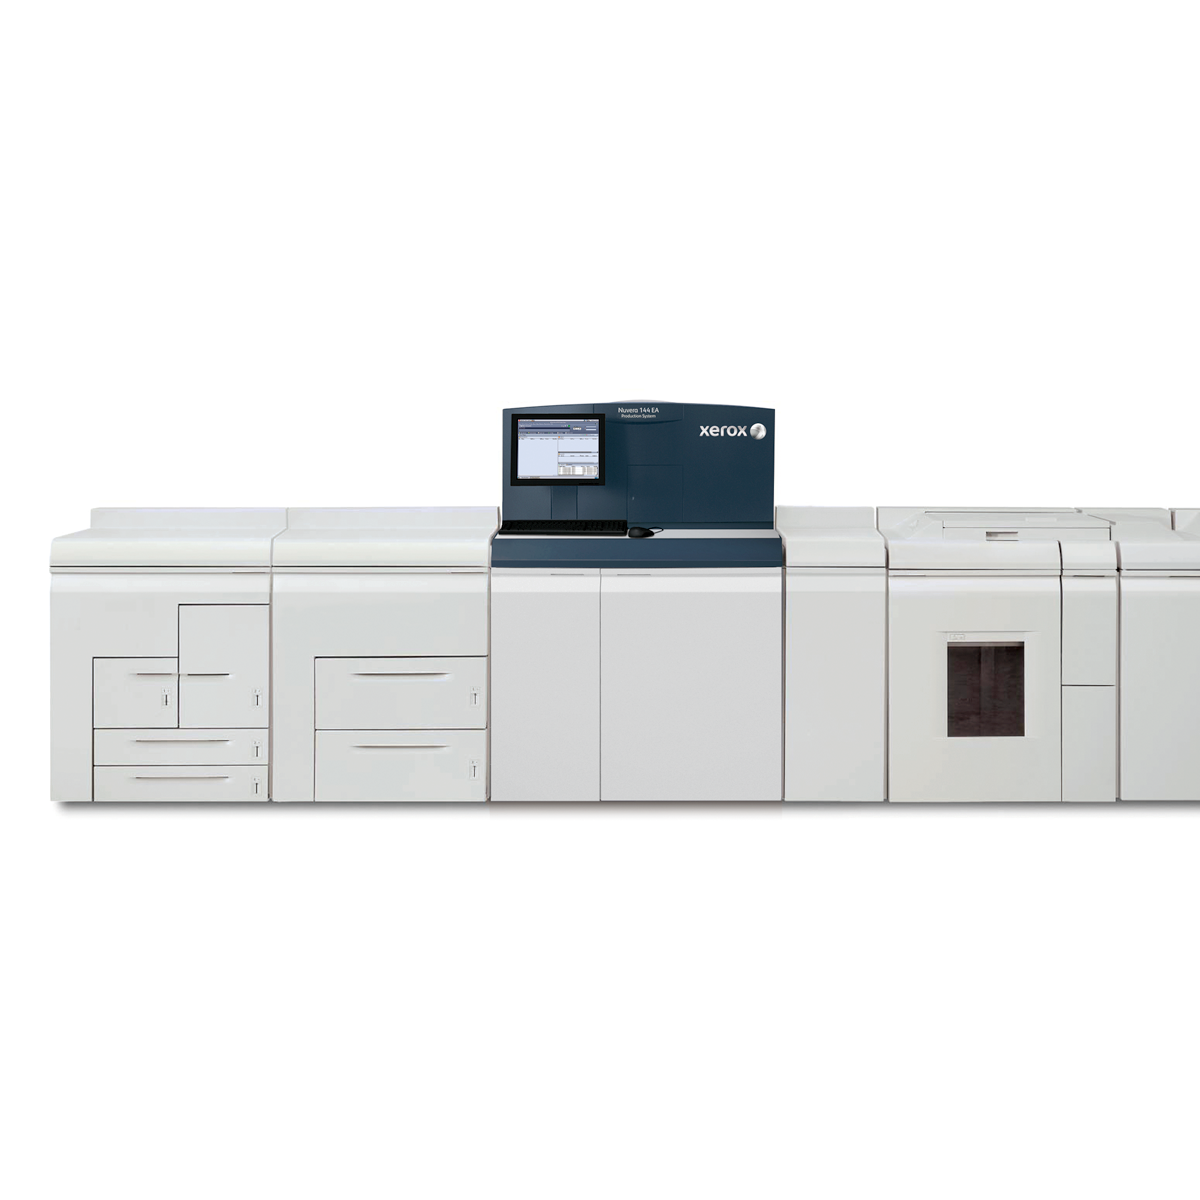 Xerox Nuvera 144 MX Digital Production System